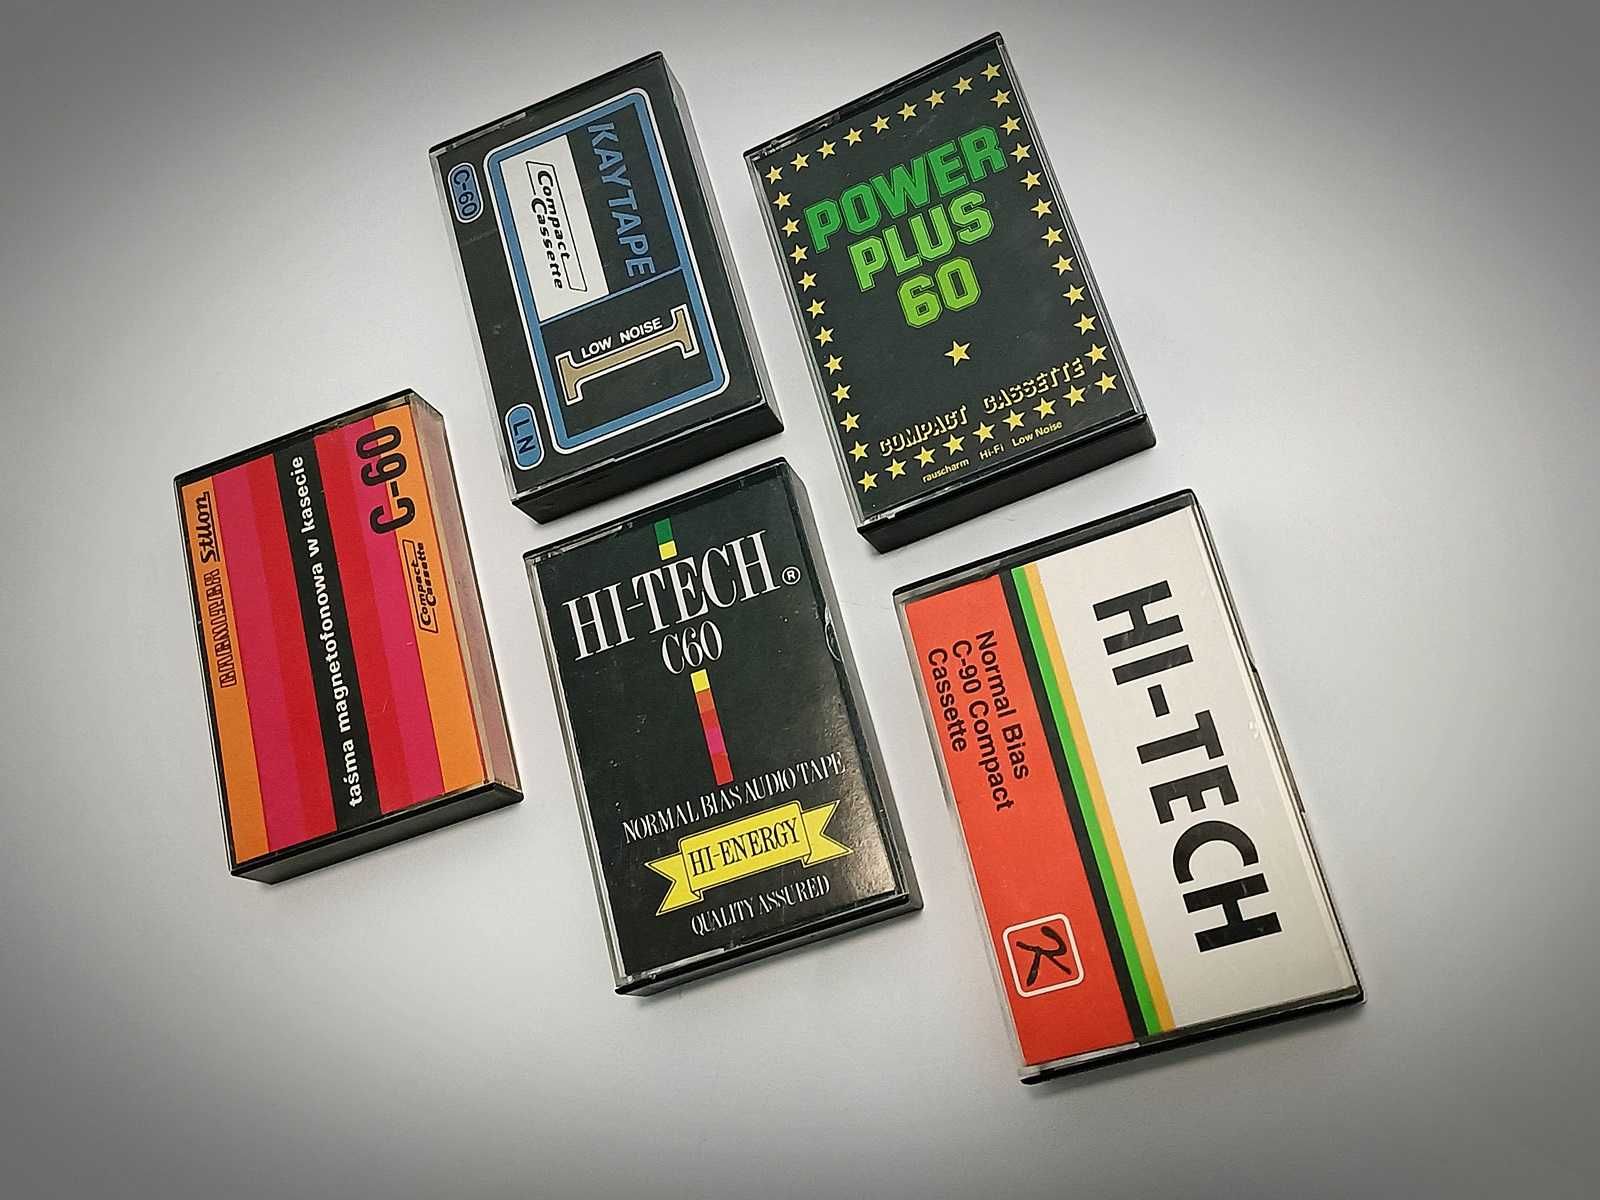 5 vintage kaset magnetofonowych (cena za komplet)